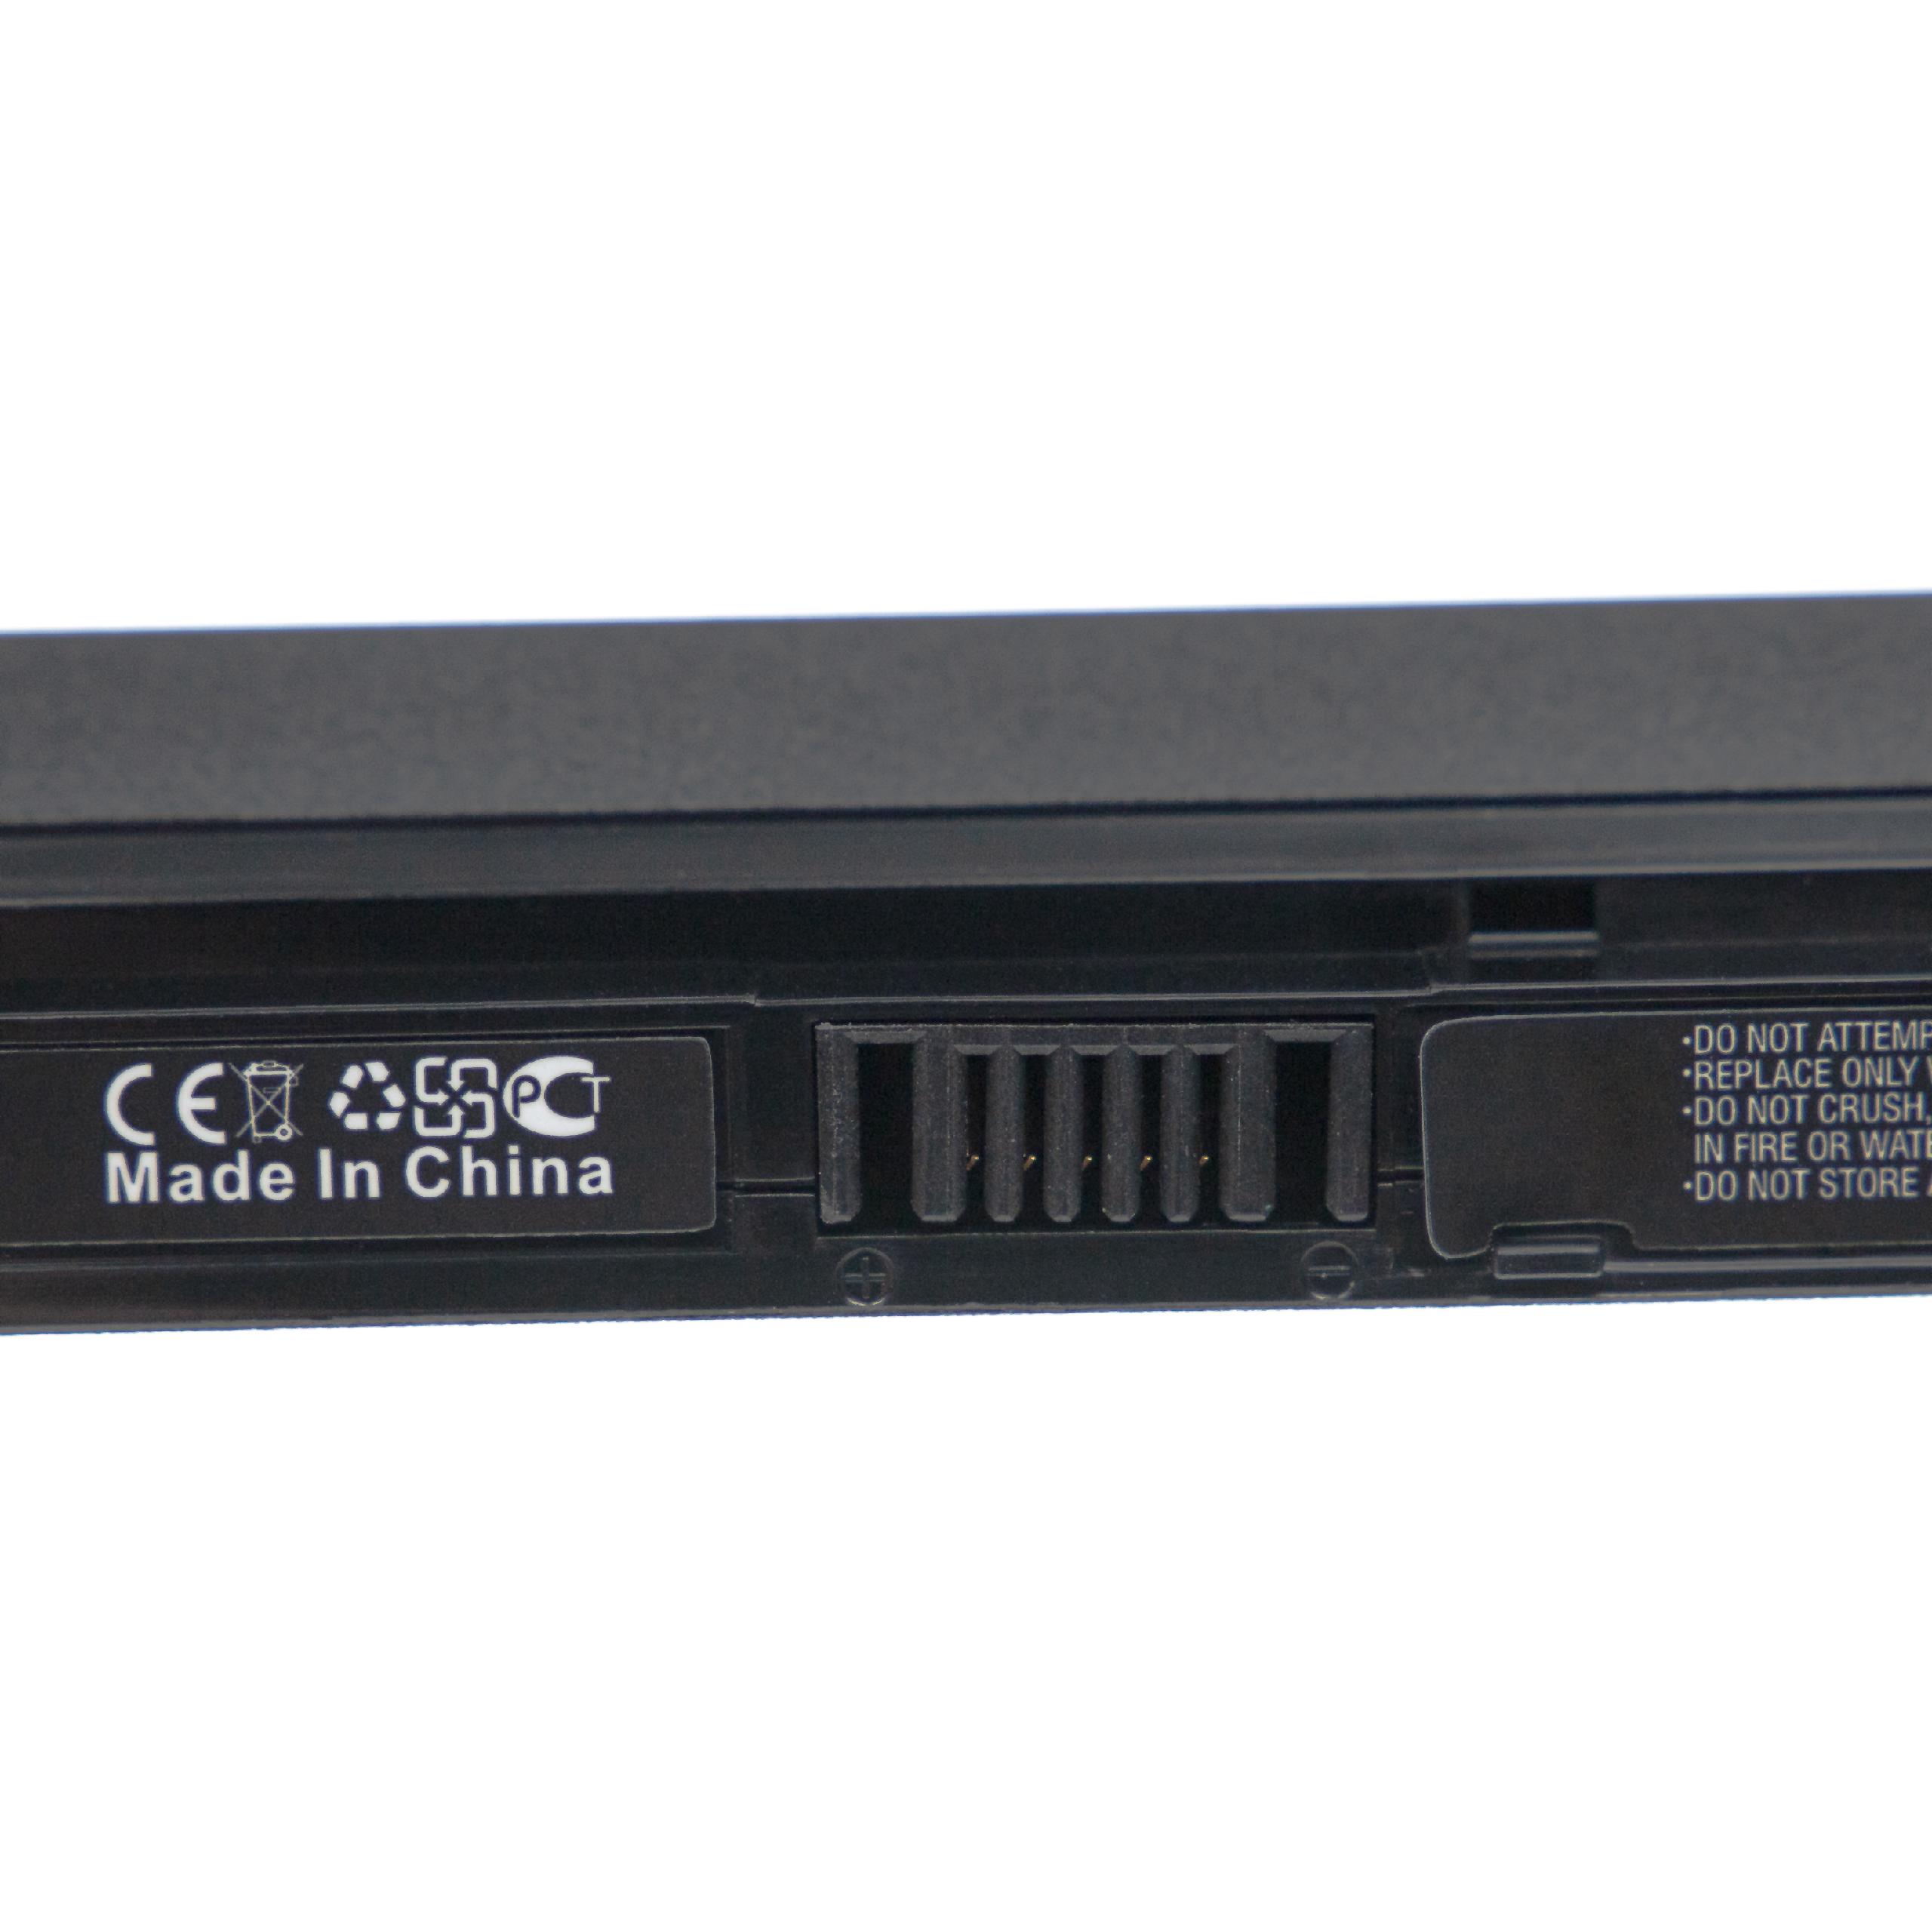 Akumulator do laptopa zamiennik Clevo 6-87-W95KS, 6-87-W95KS-42F2 - 2200 mAh 14,8 V Li-Ion, czarny